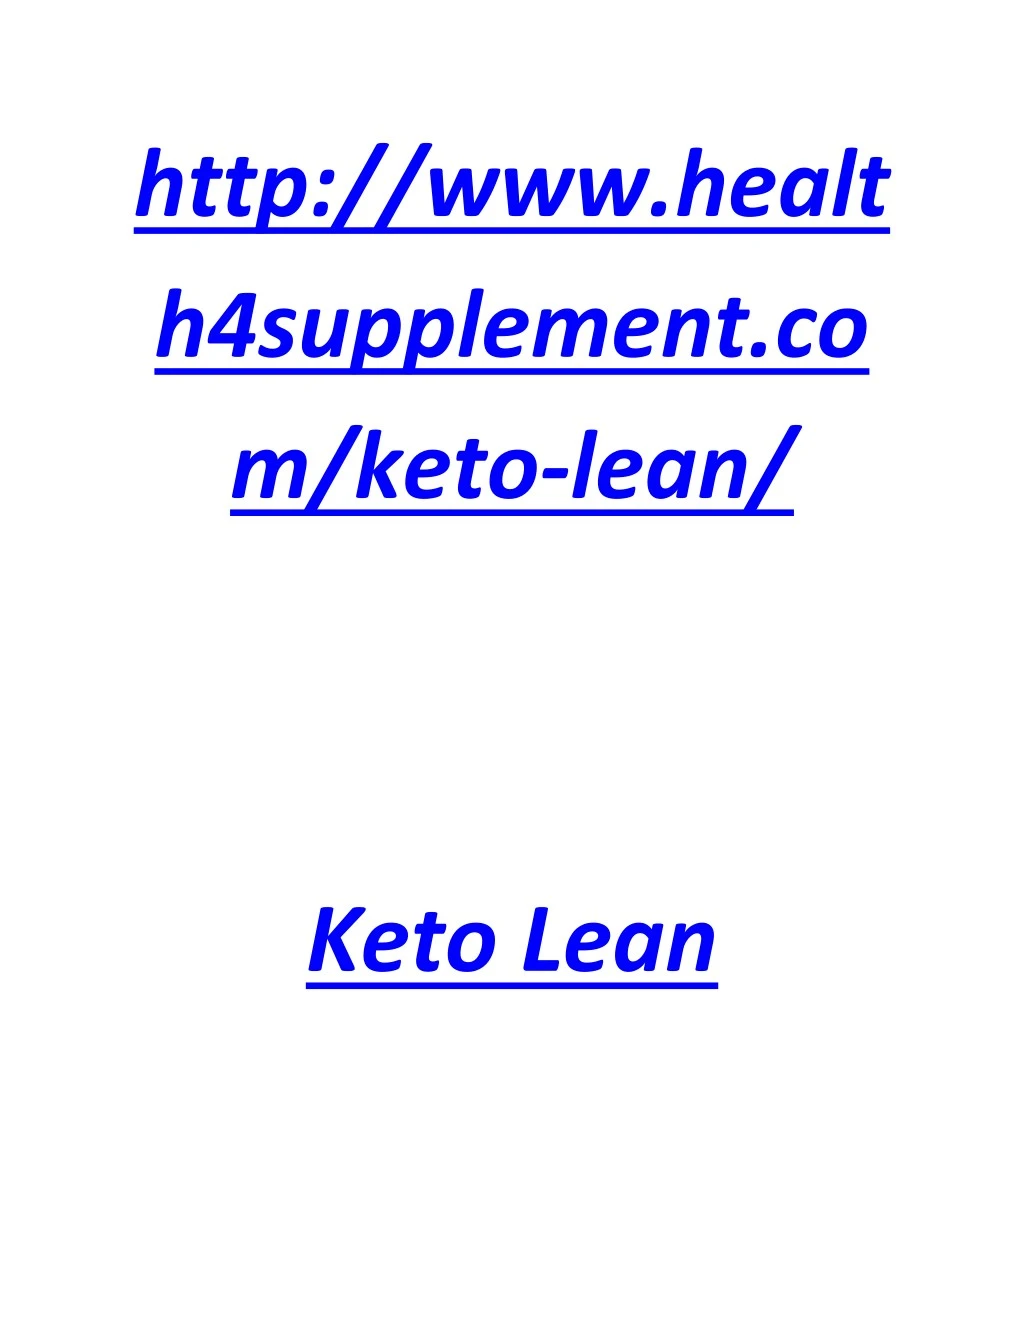 http www healt h4supplement co m keto lean